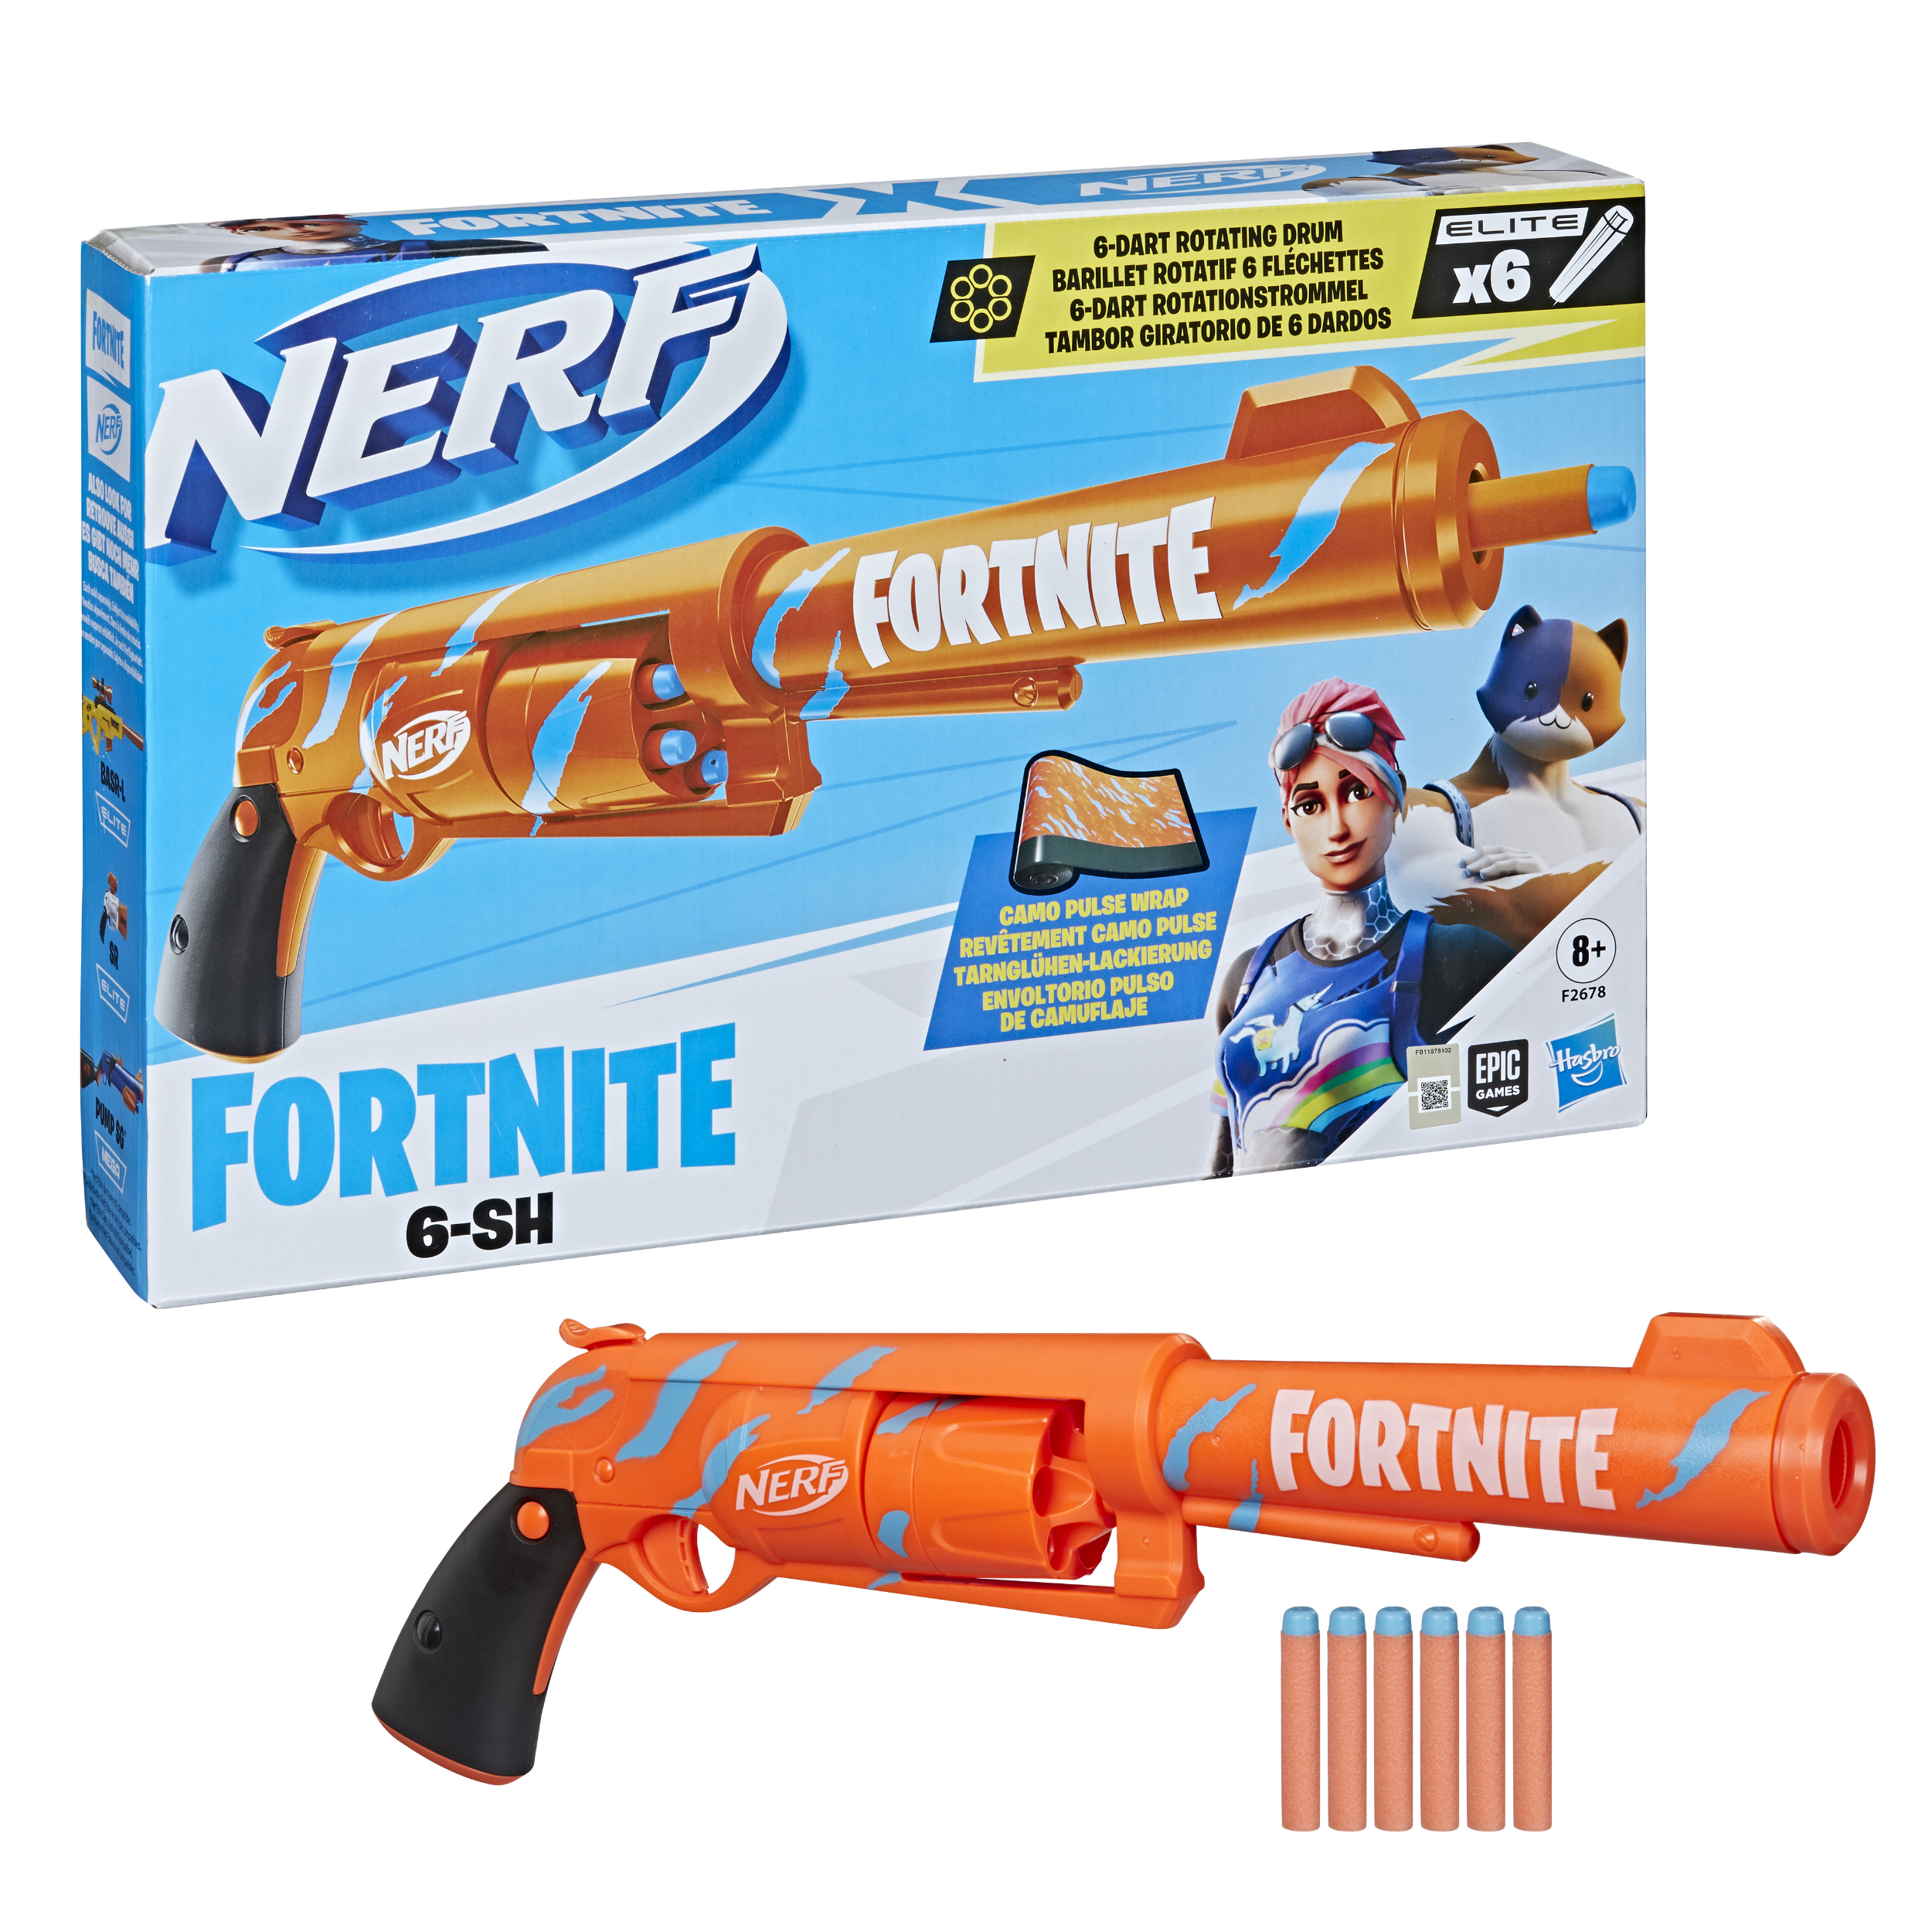 NERF Fortnite Dual Pack Includes 2 Fortnite Blasters, Flint-Knock Dart  Blaster, LP Dart Blaster, and 6 Nerf Elite Foam Darts